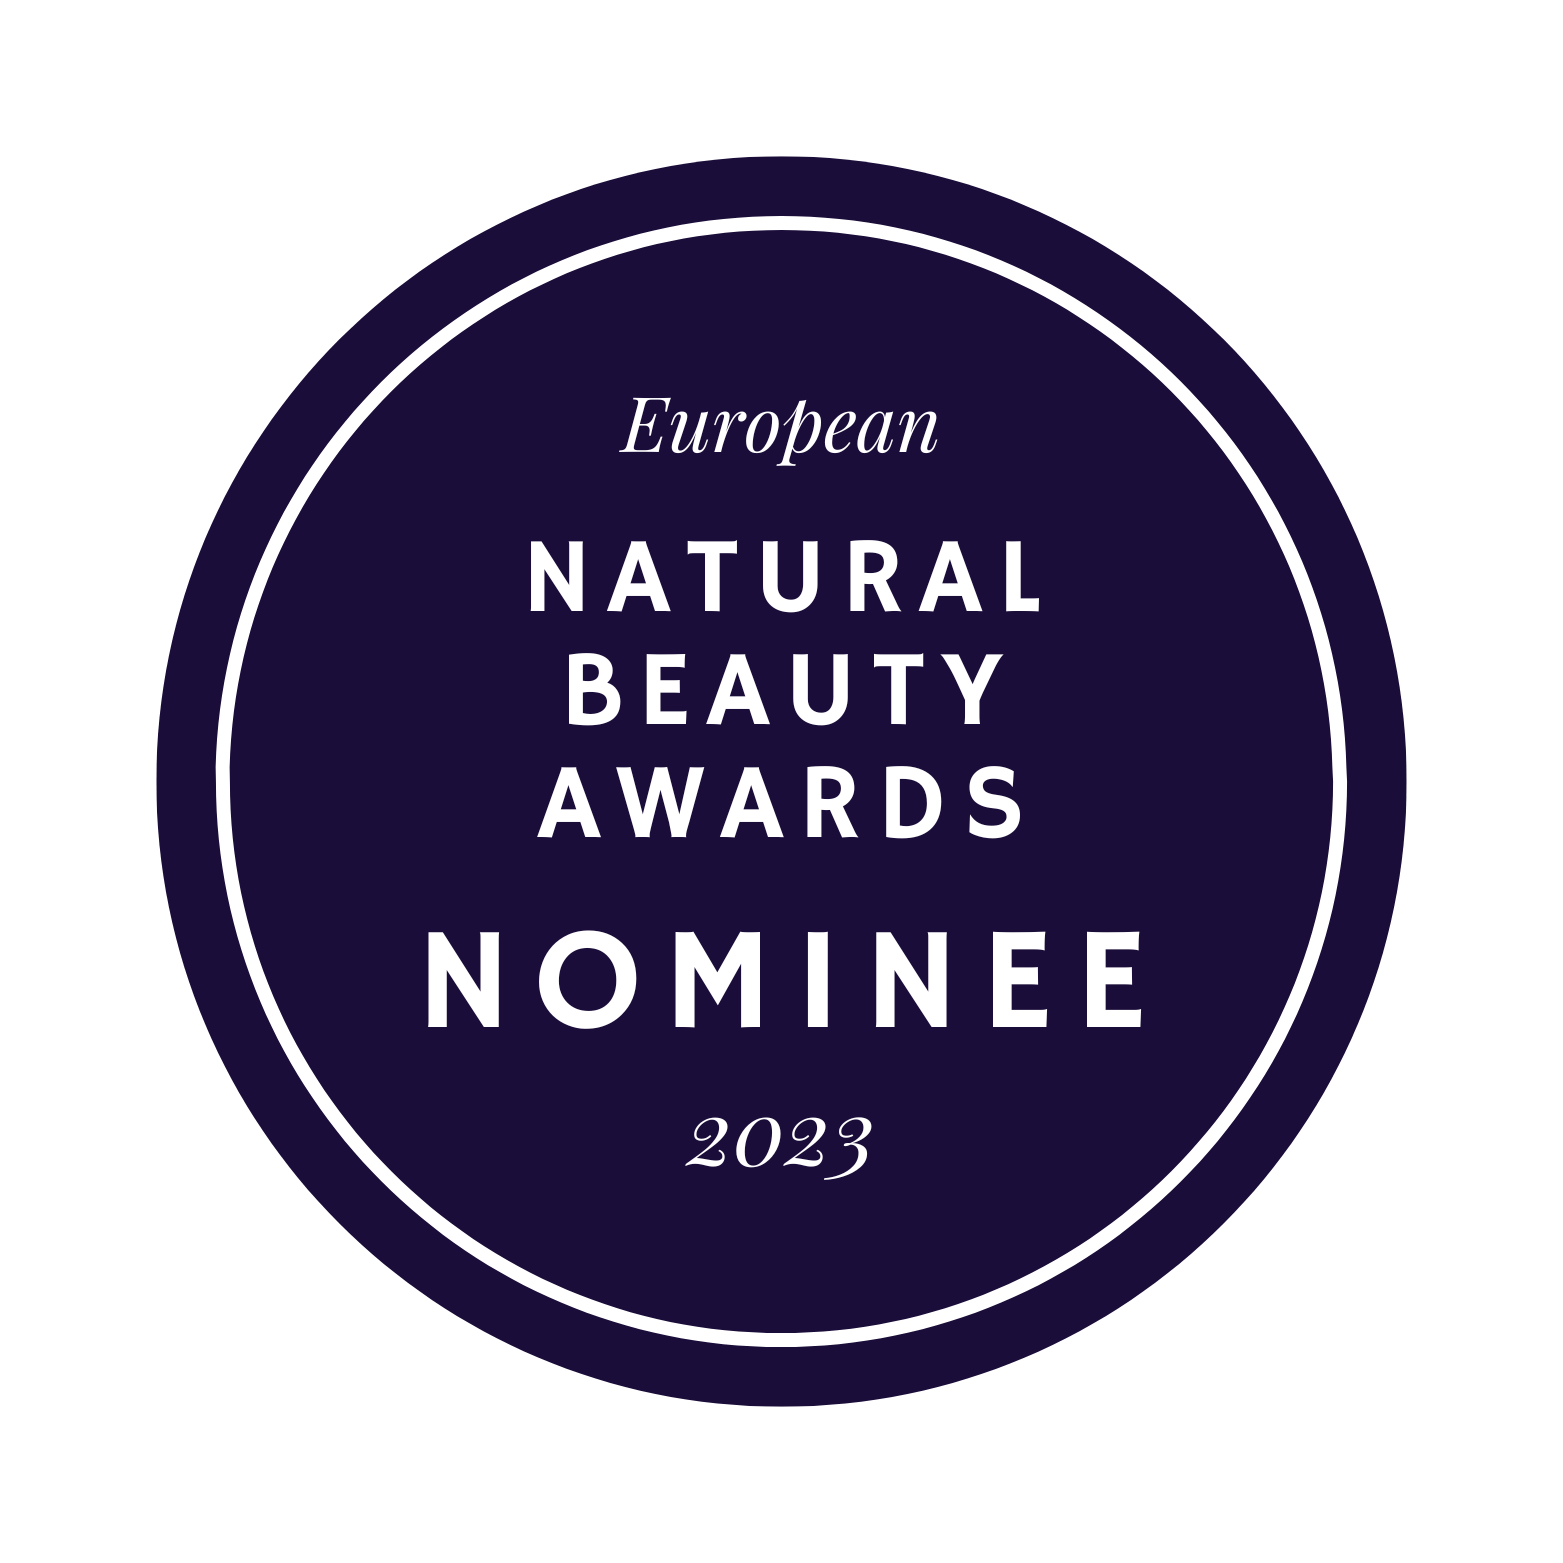 EUROPEAN NATURAL BEAUTY AWARDS Nominee 2023